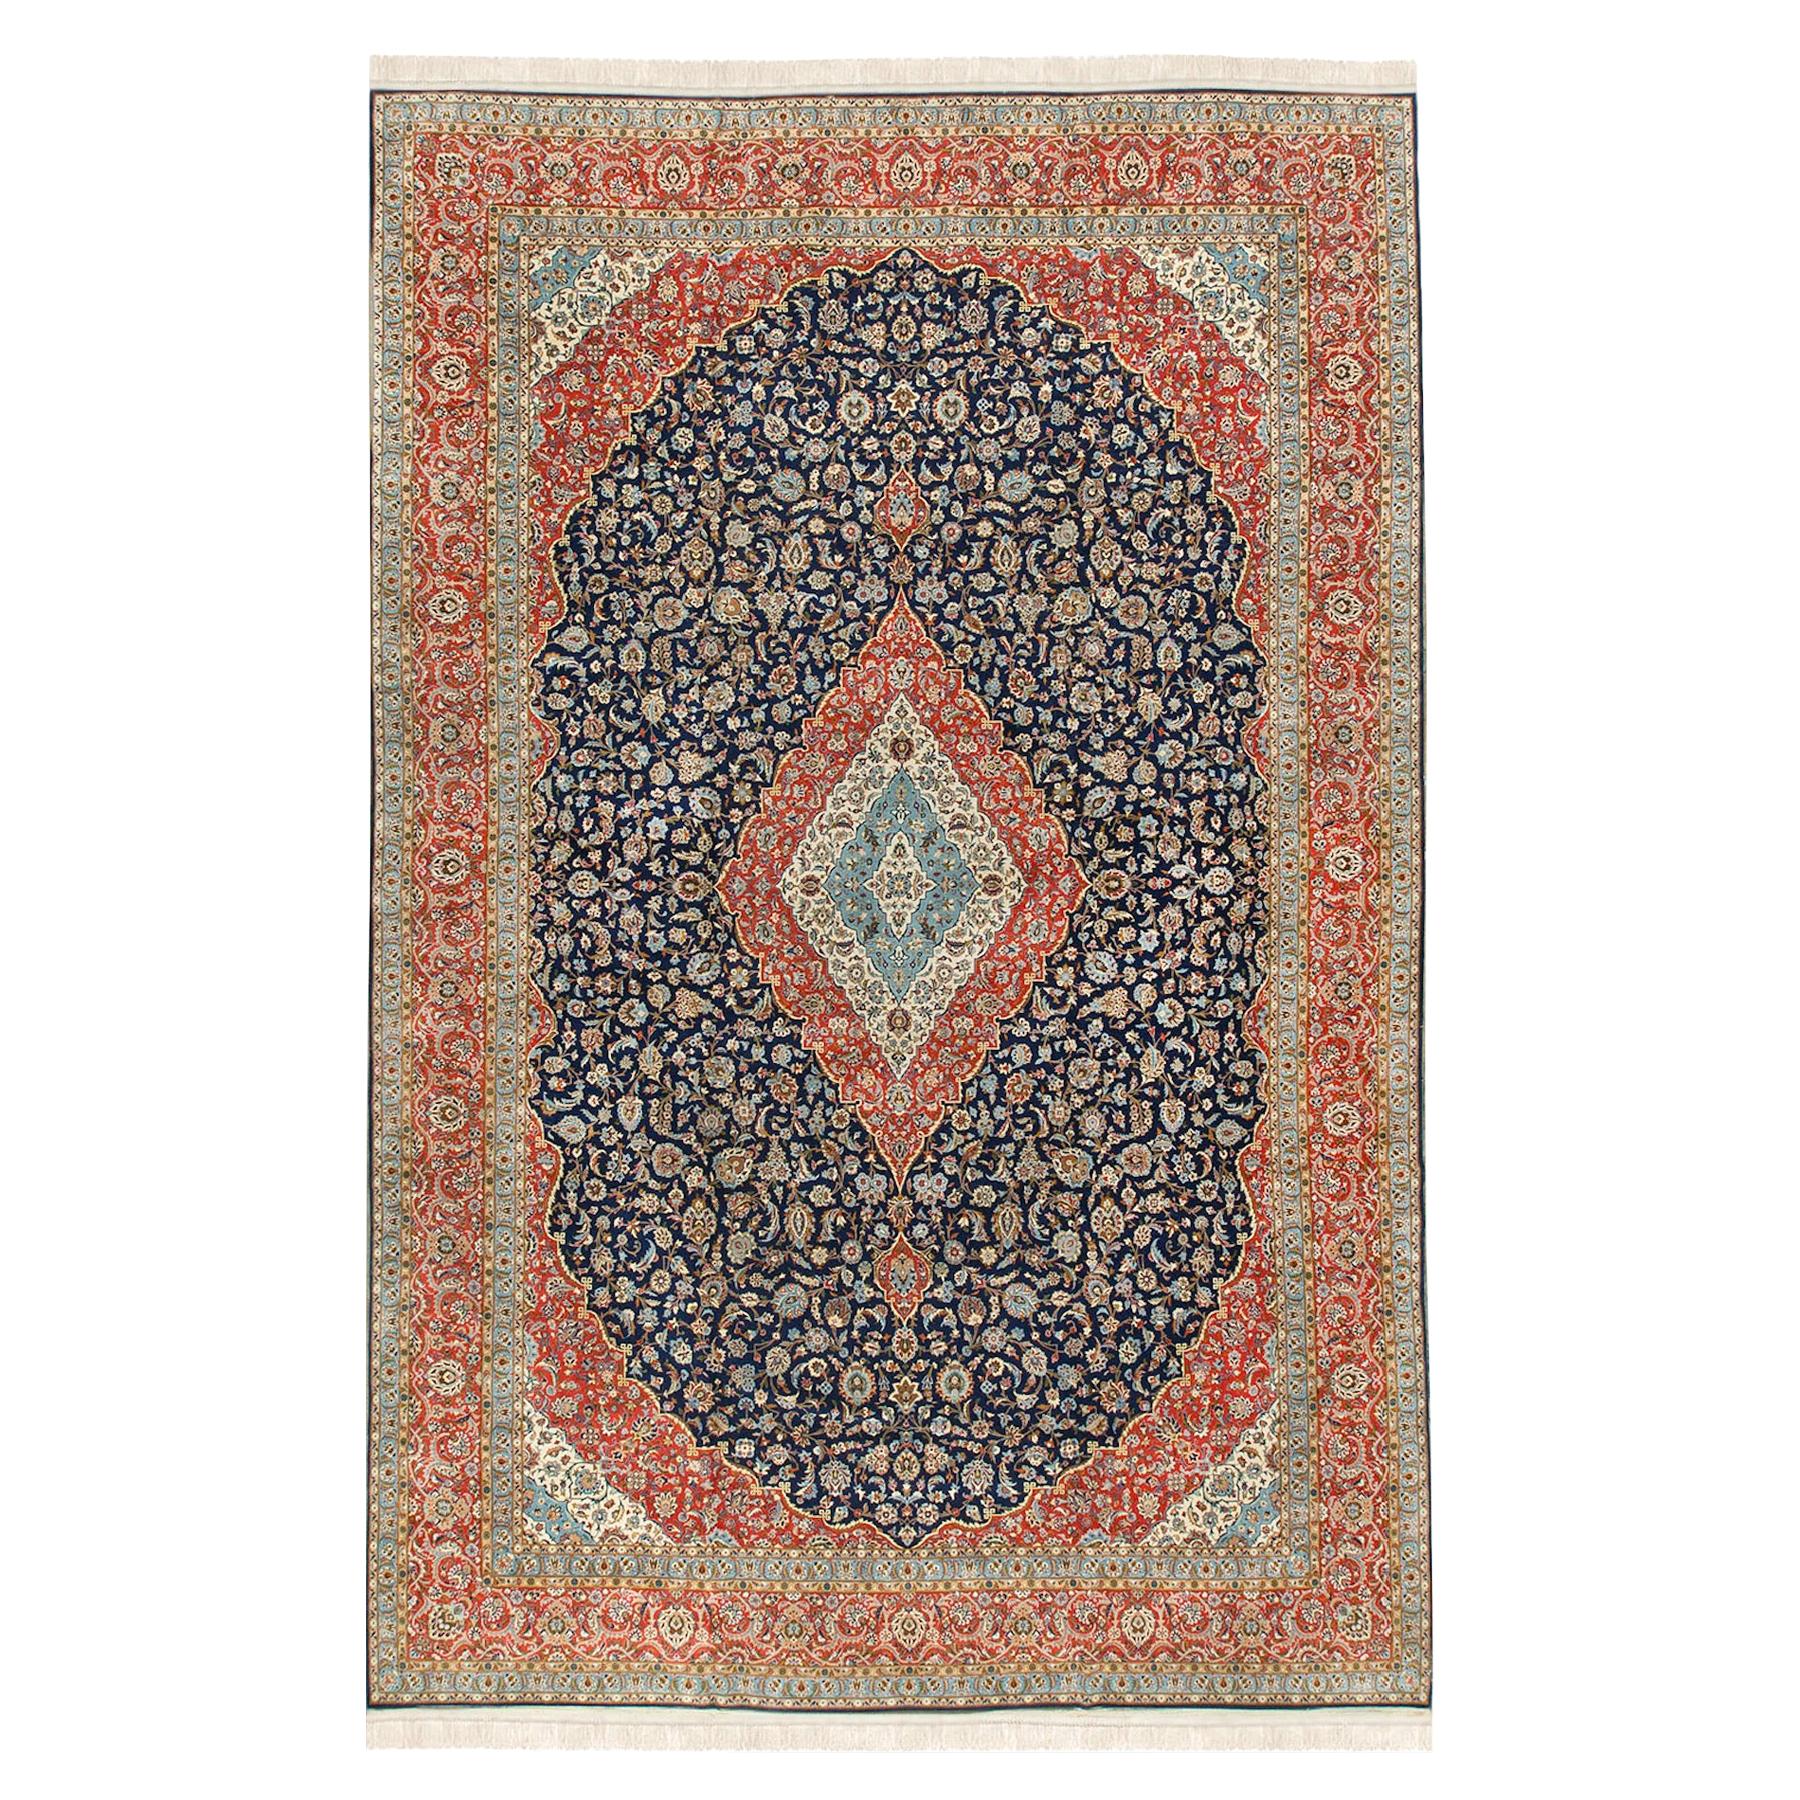 Tapis de Kashan persan surdimensionn vintage, vers 1940 13''2 x 19''8